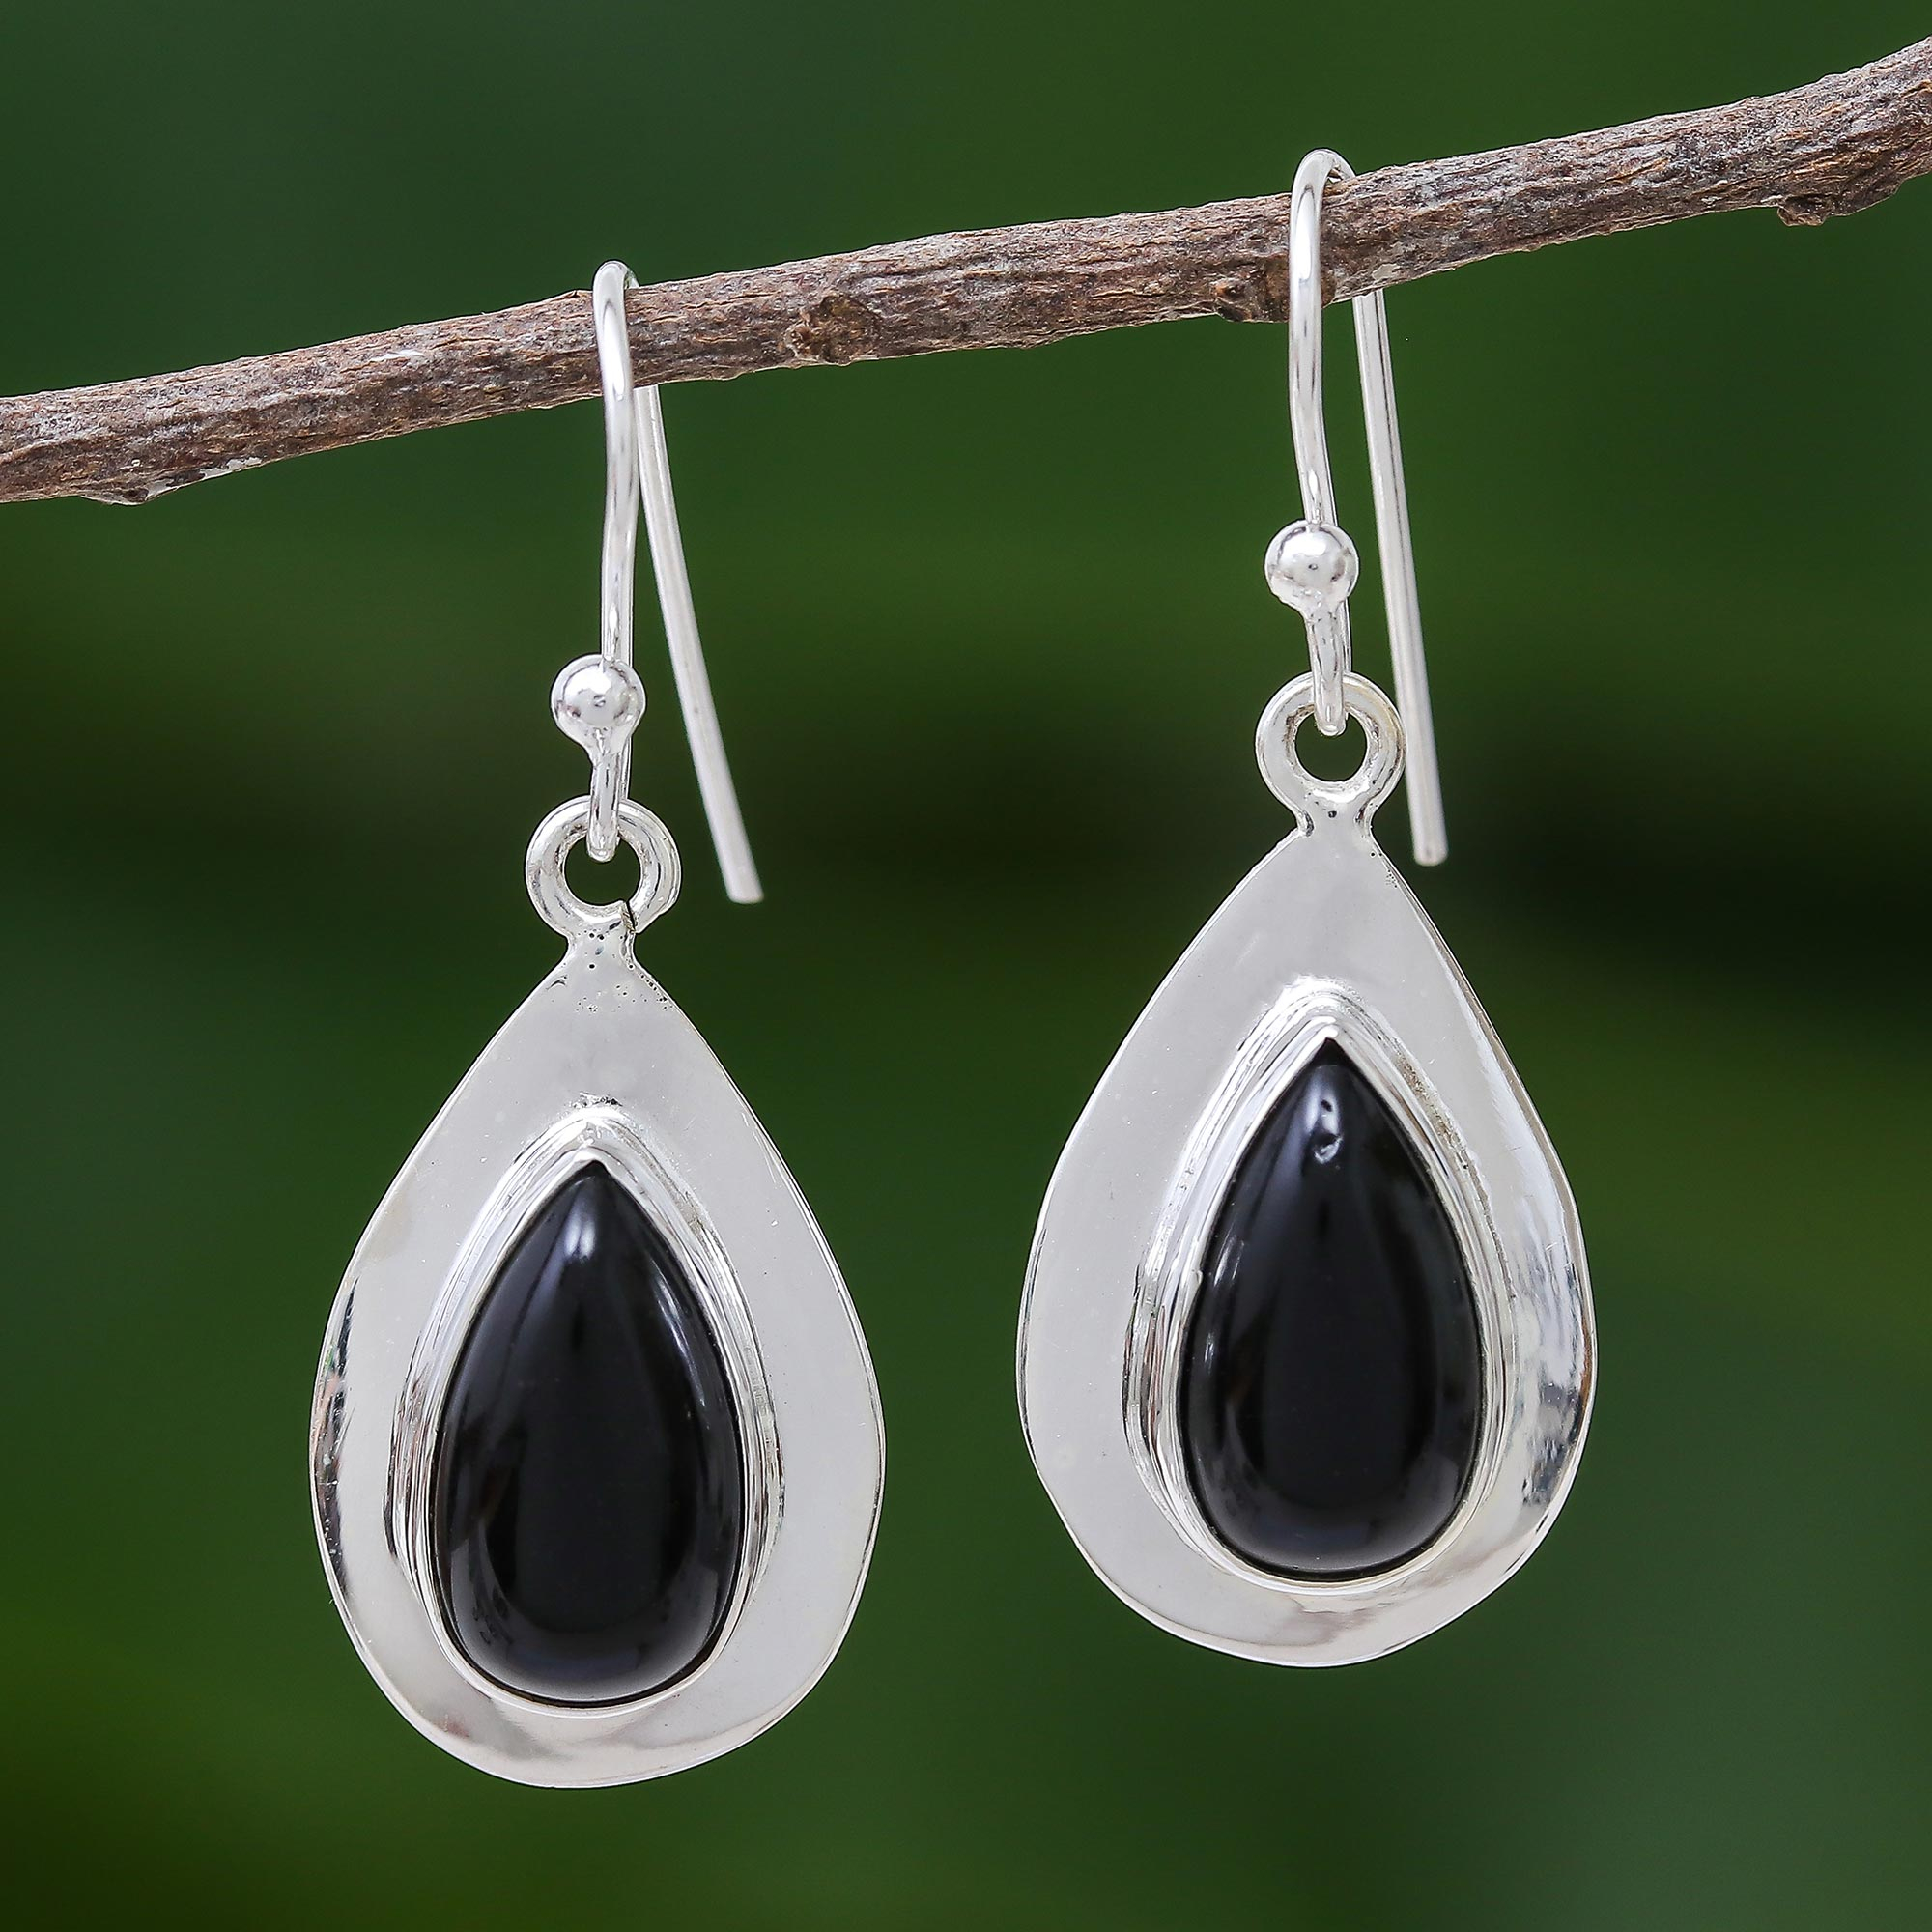 Handmade in 925 Sterling Silver Black Onyx Tear Drop Earrings With Gift Bag